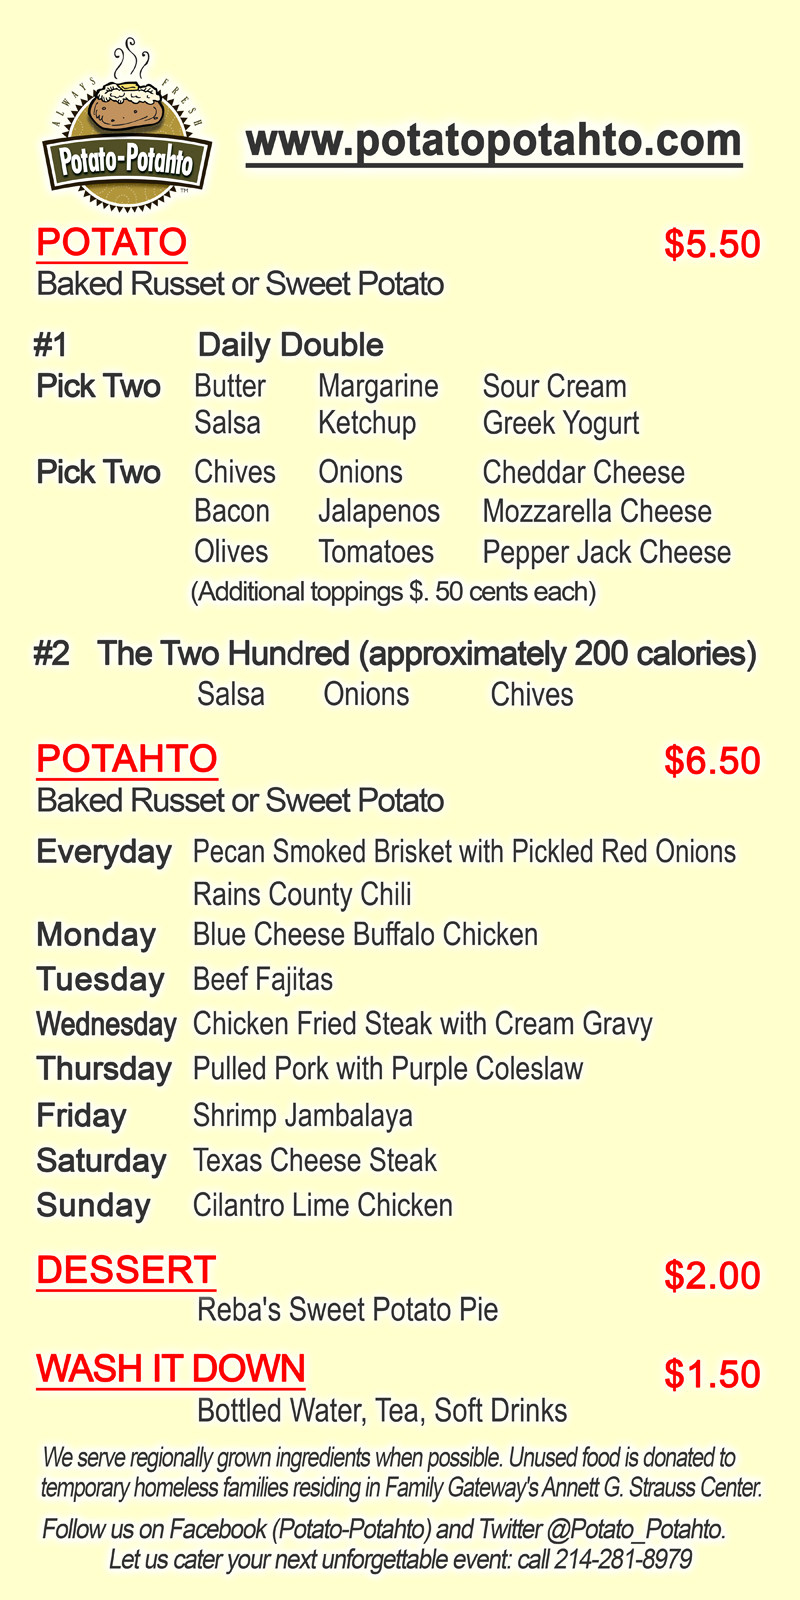 Hot Potato | Finally, a Baked Potato Food Truck